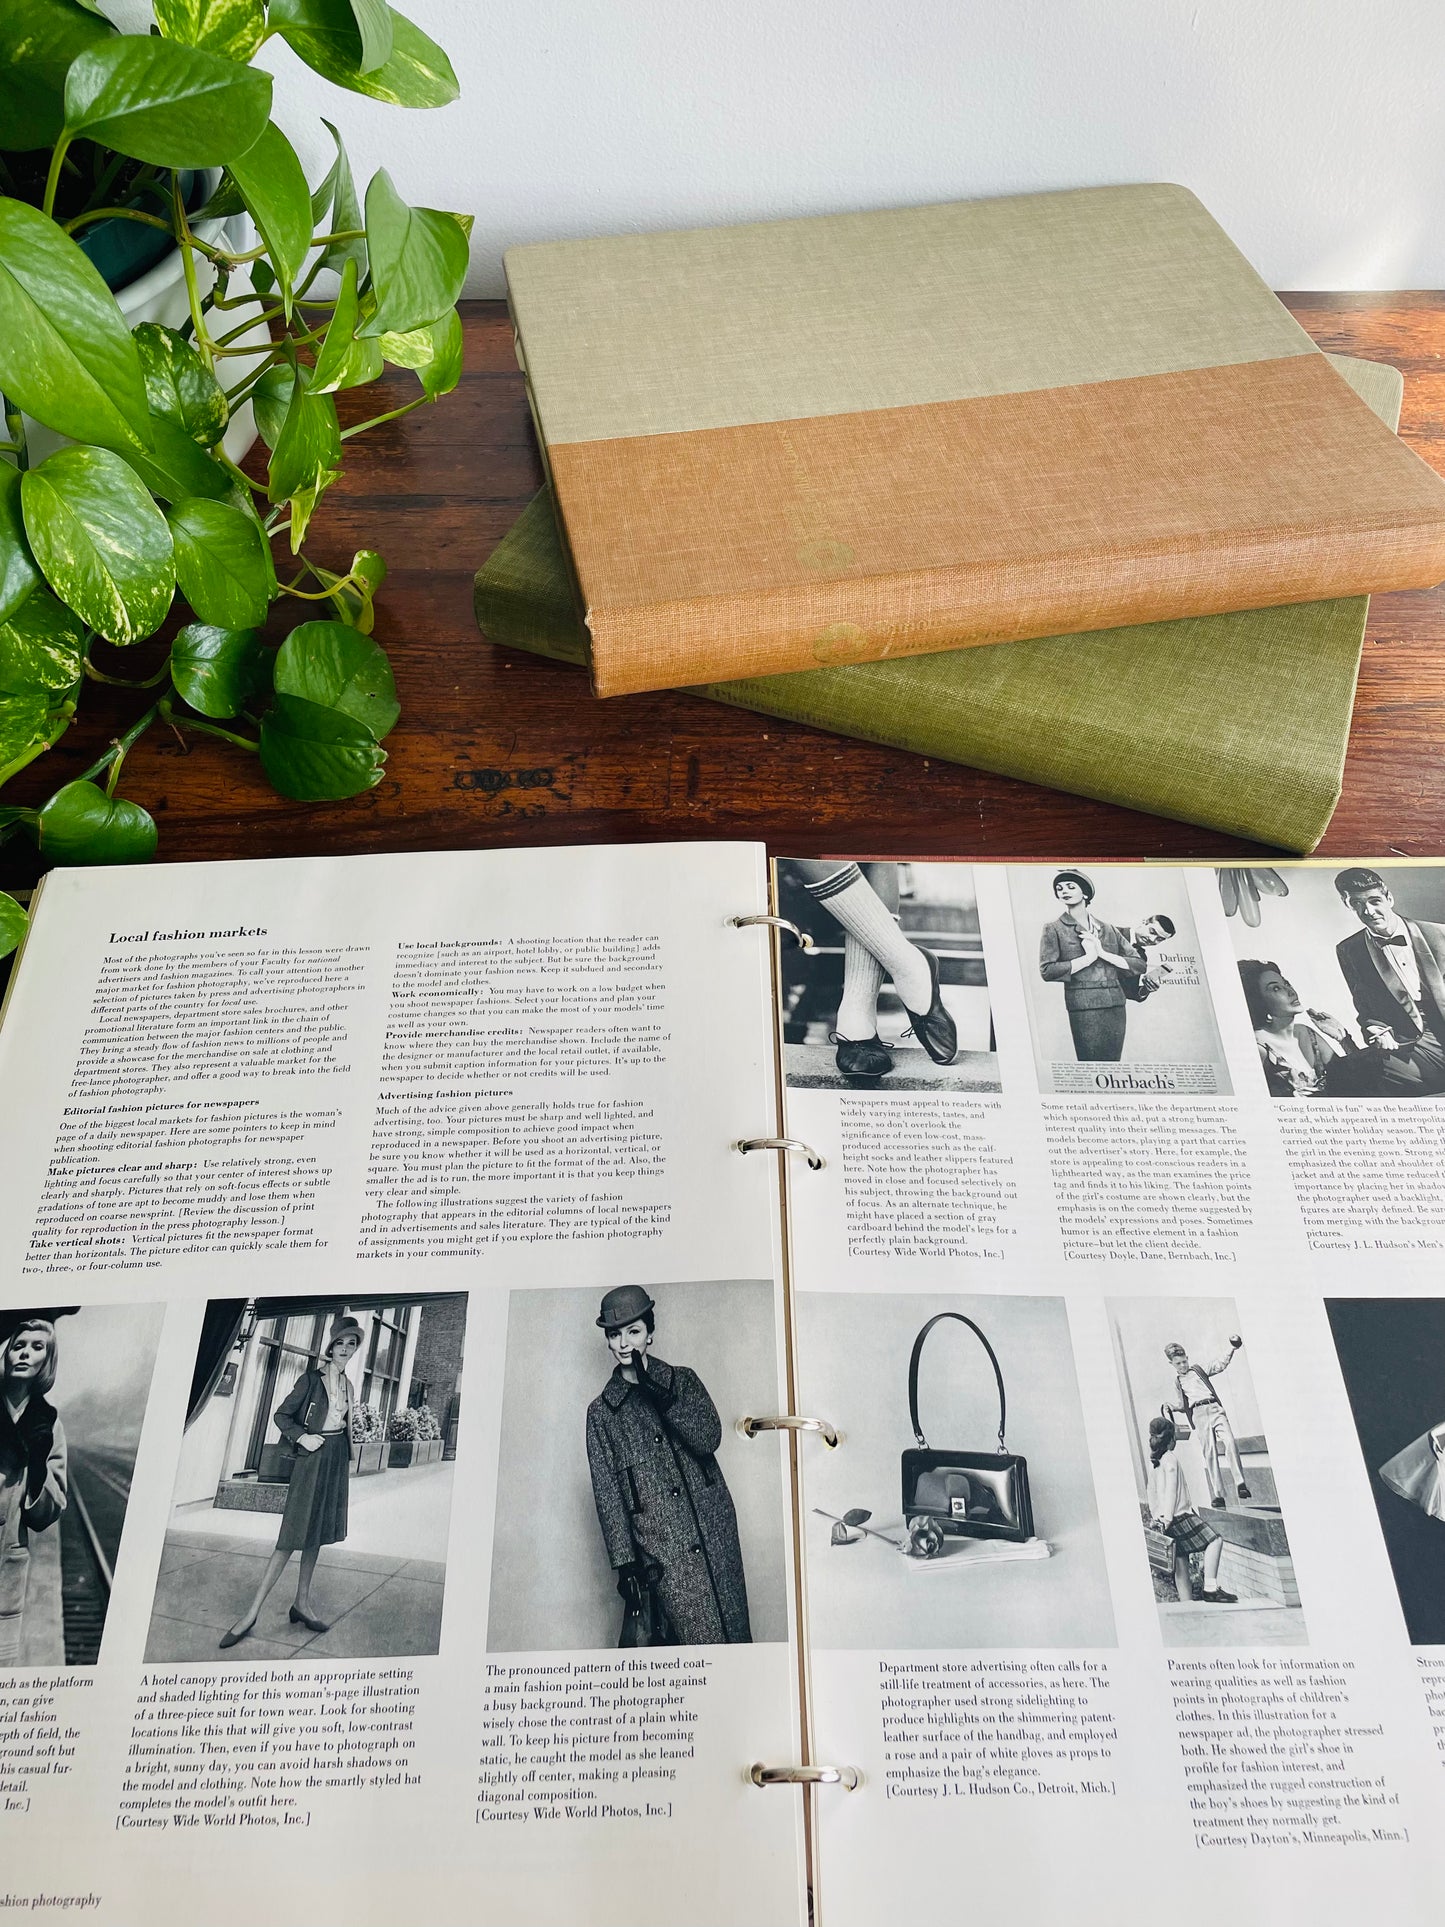 Richard Avedon Famous Photographers Course 1964 Clothbound Hardcover Binders - Volumes 1, 3, & 4 (3 Books)